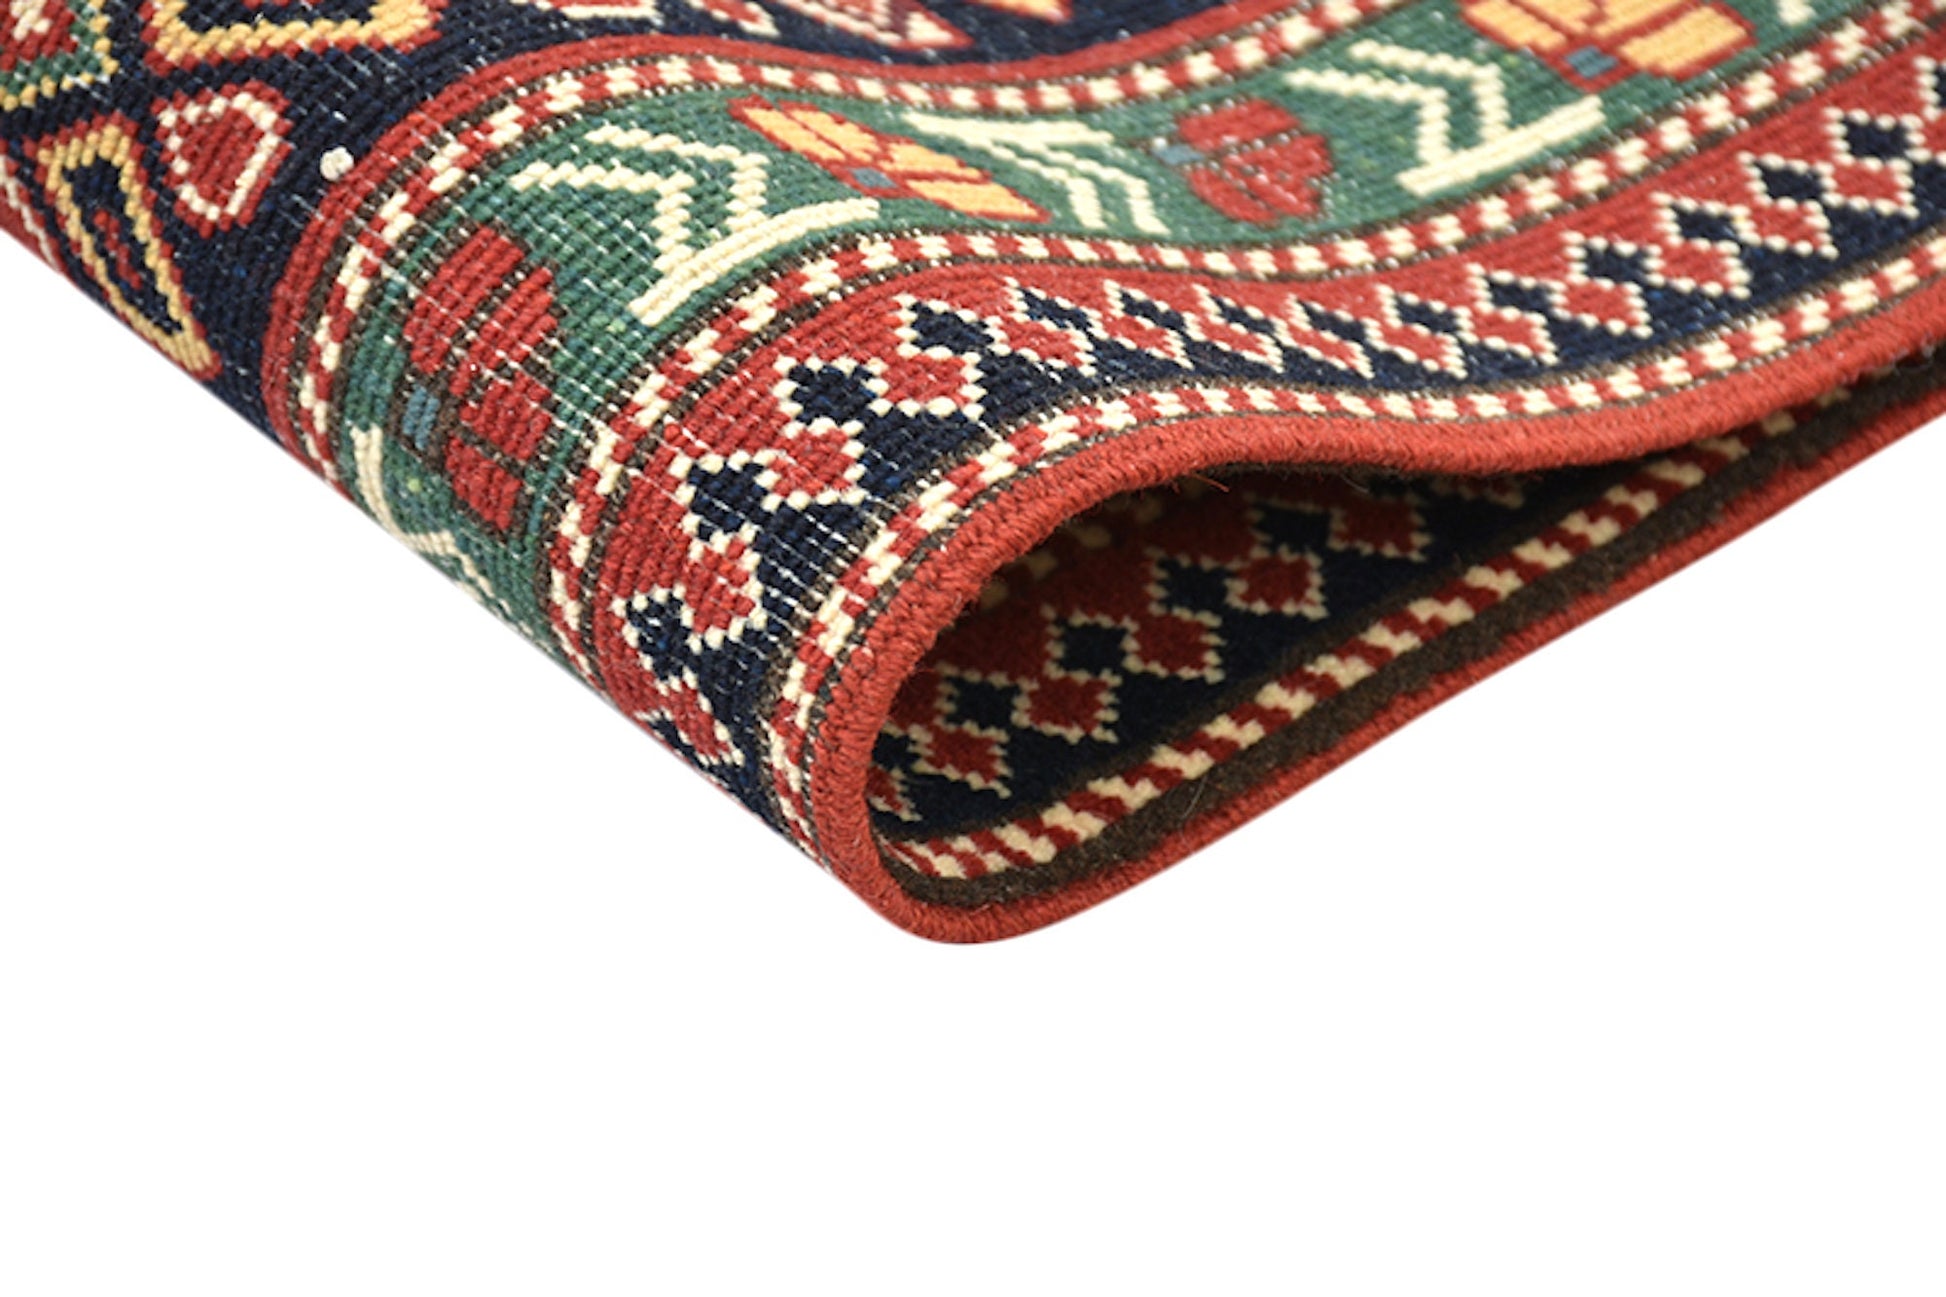 7 x 10 Red Large Turkish Vintage Rug | Handmade Area Rug | Oriental Rug with Black & Green Floral Pattern | Living Room Geometric Wool